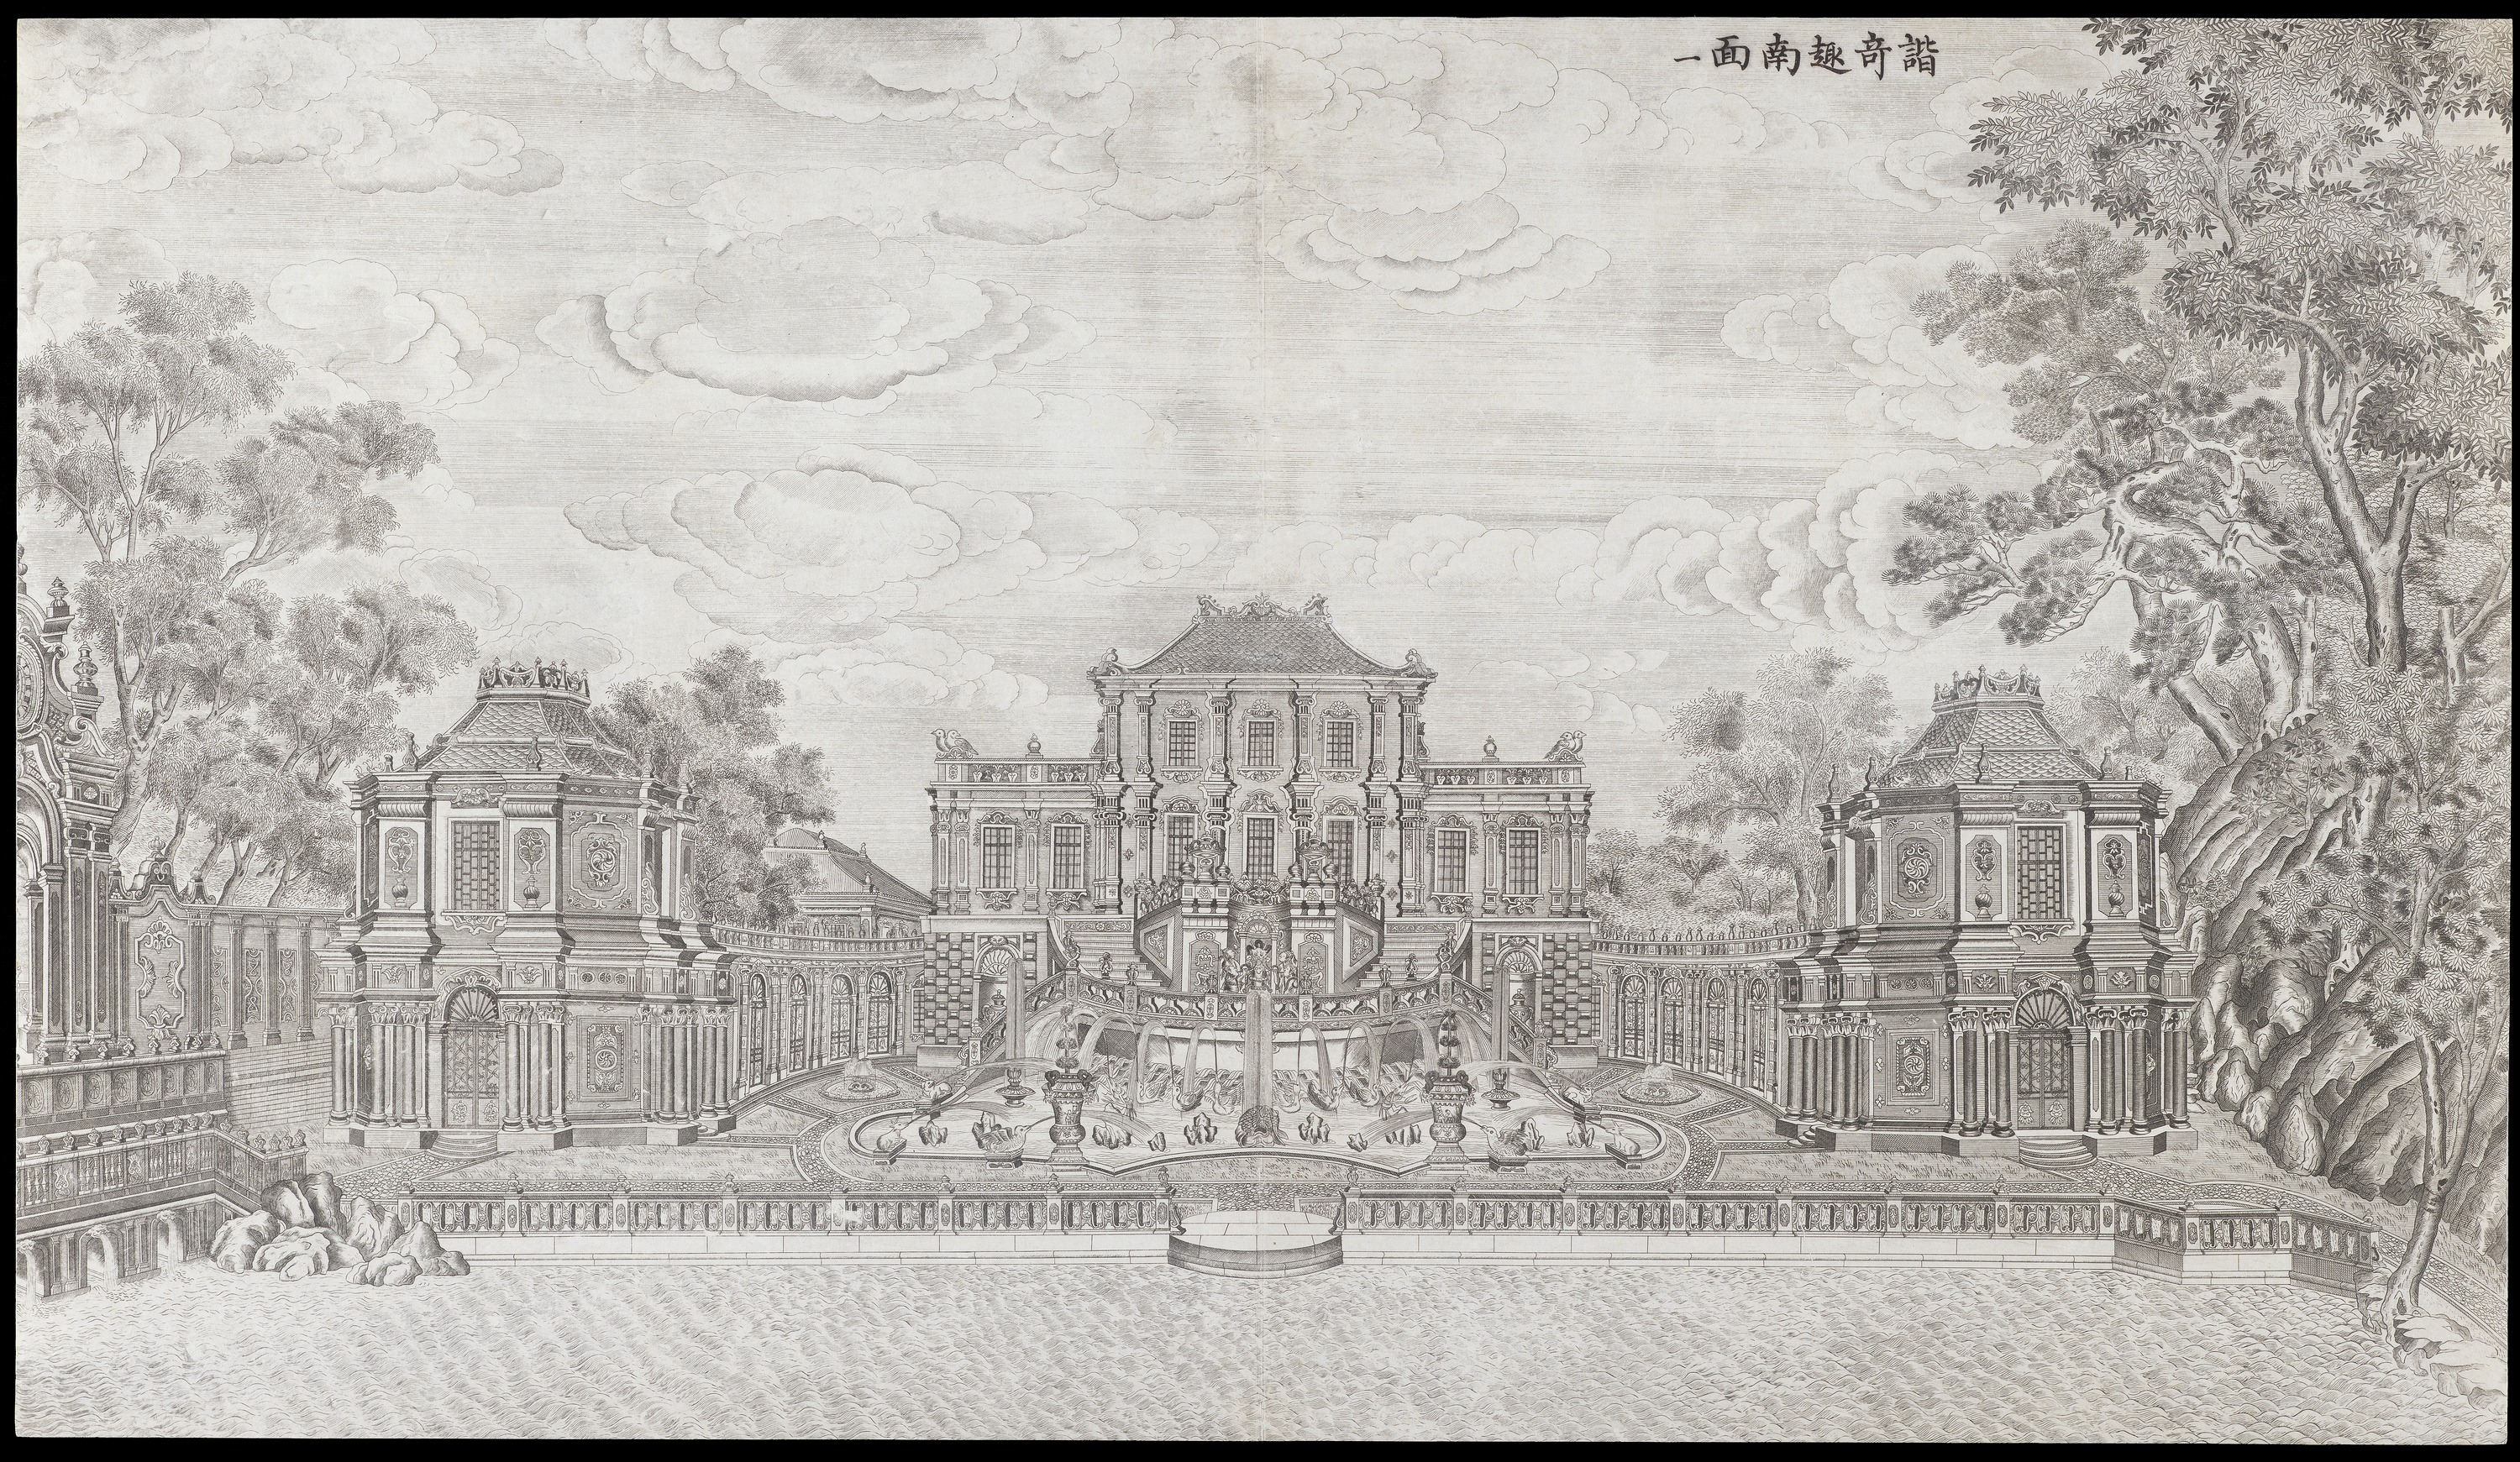 Engraving of palace